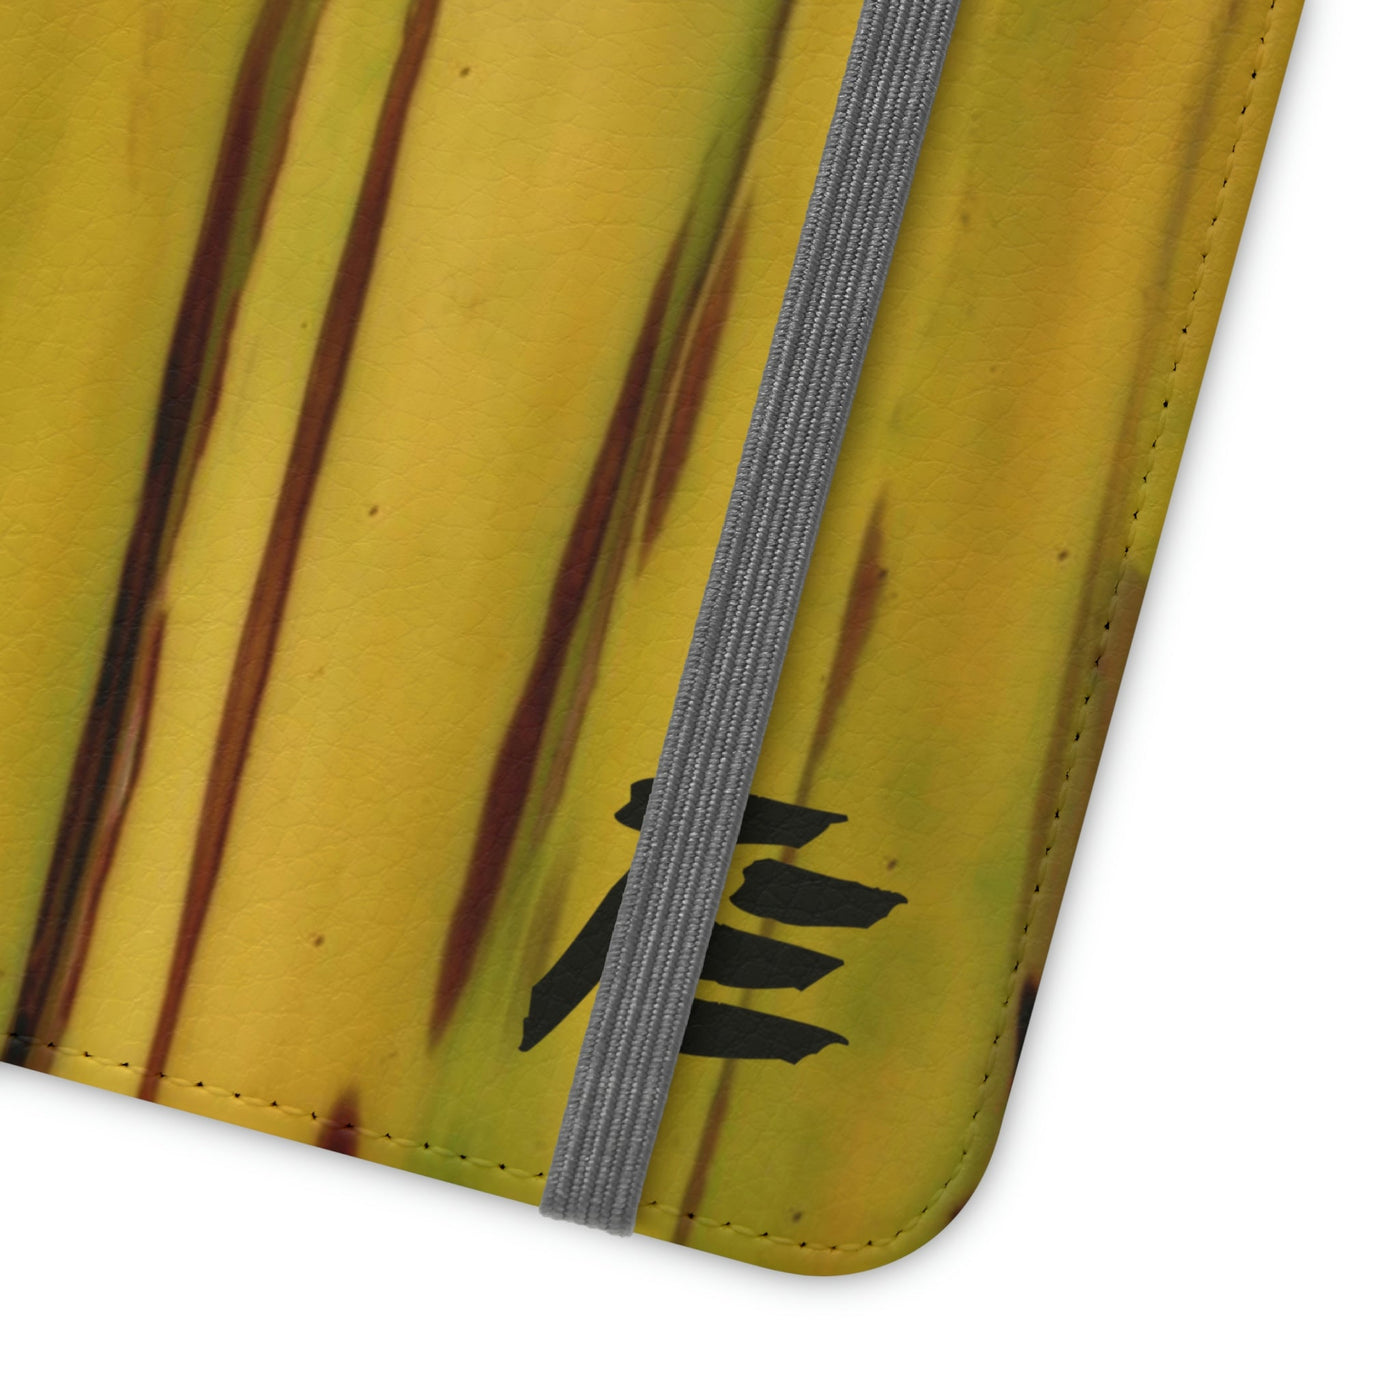 I'm Banana - Banana Peel Pattern Flip Wallet Phone Case